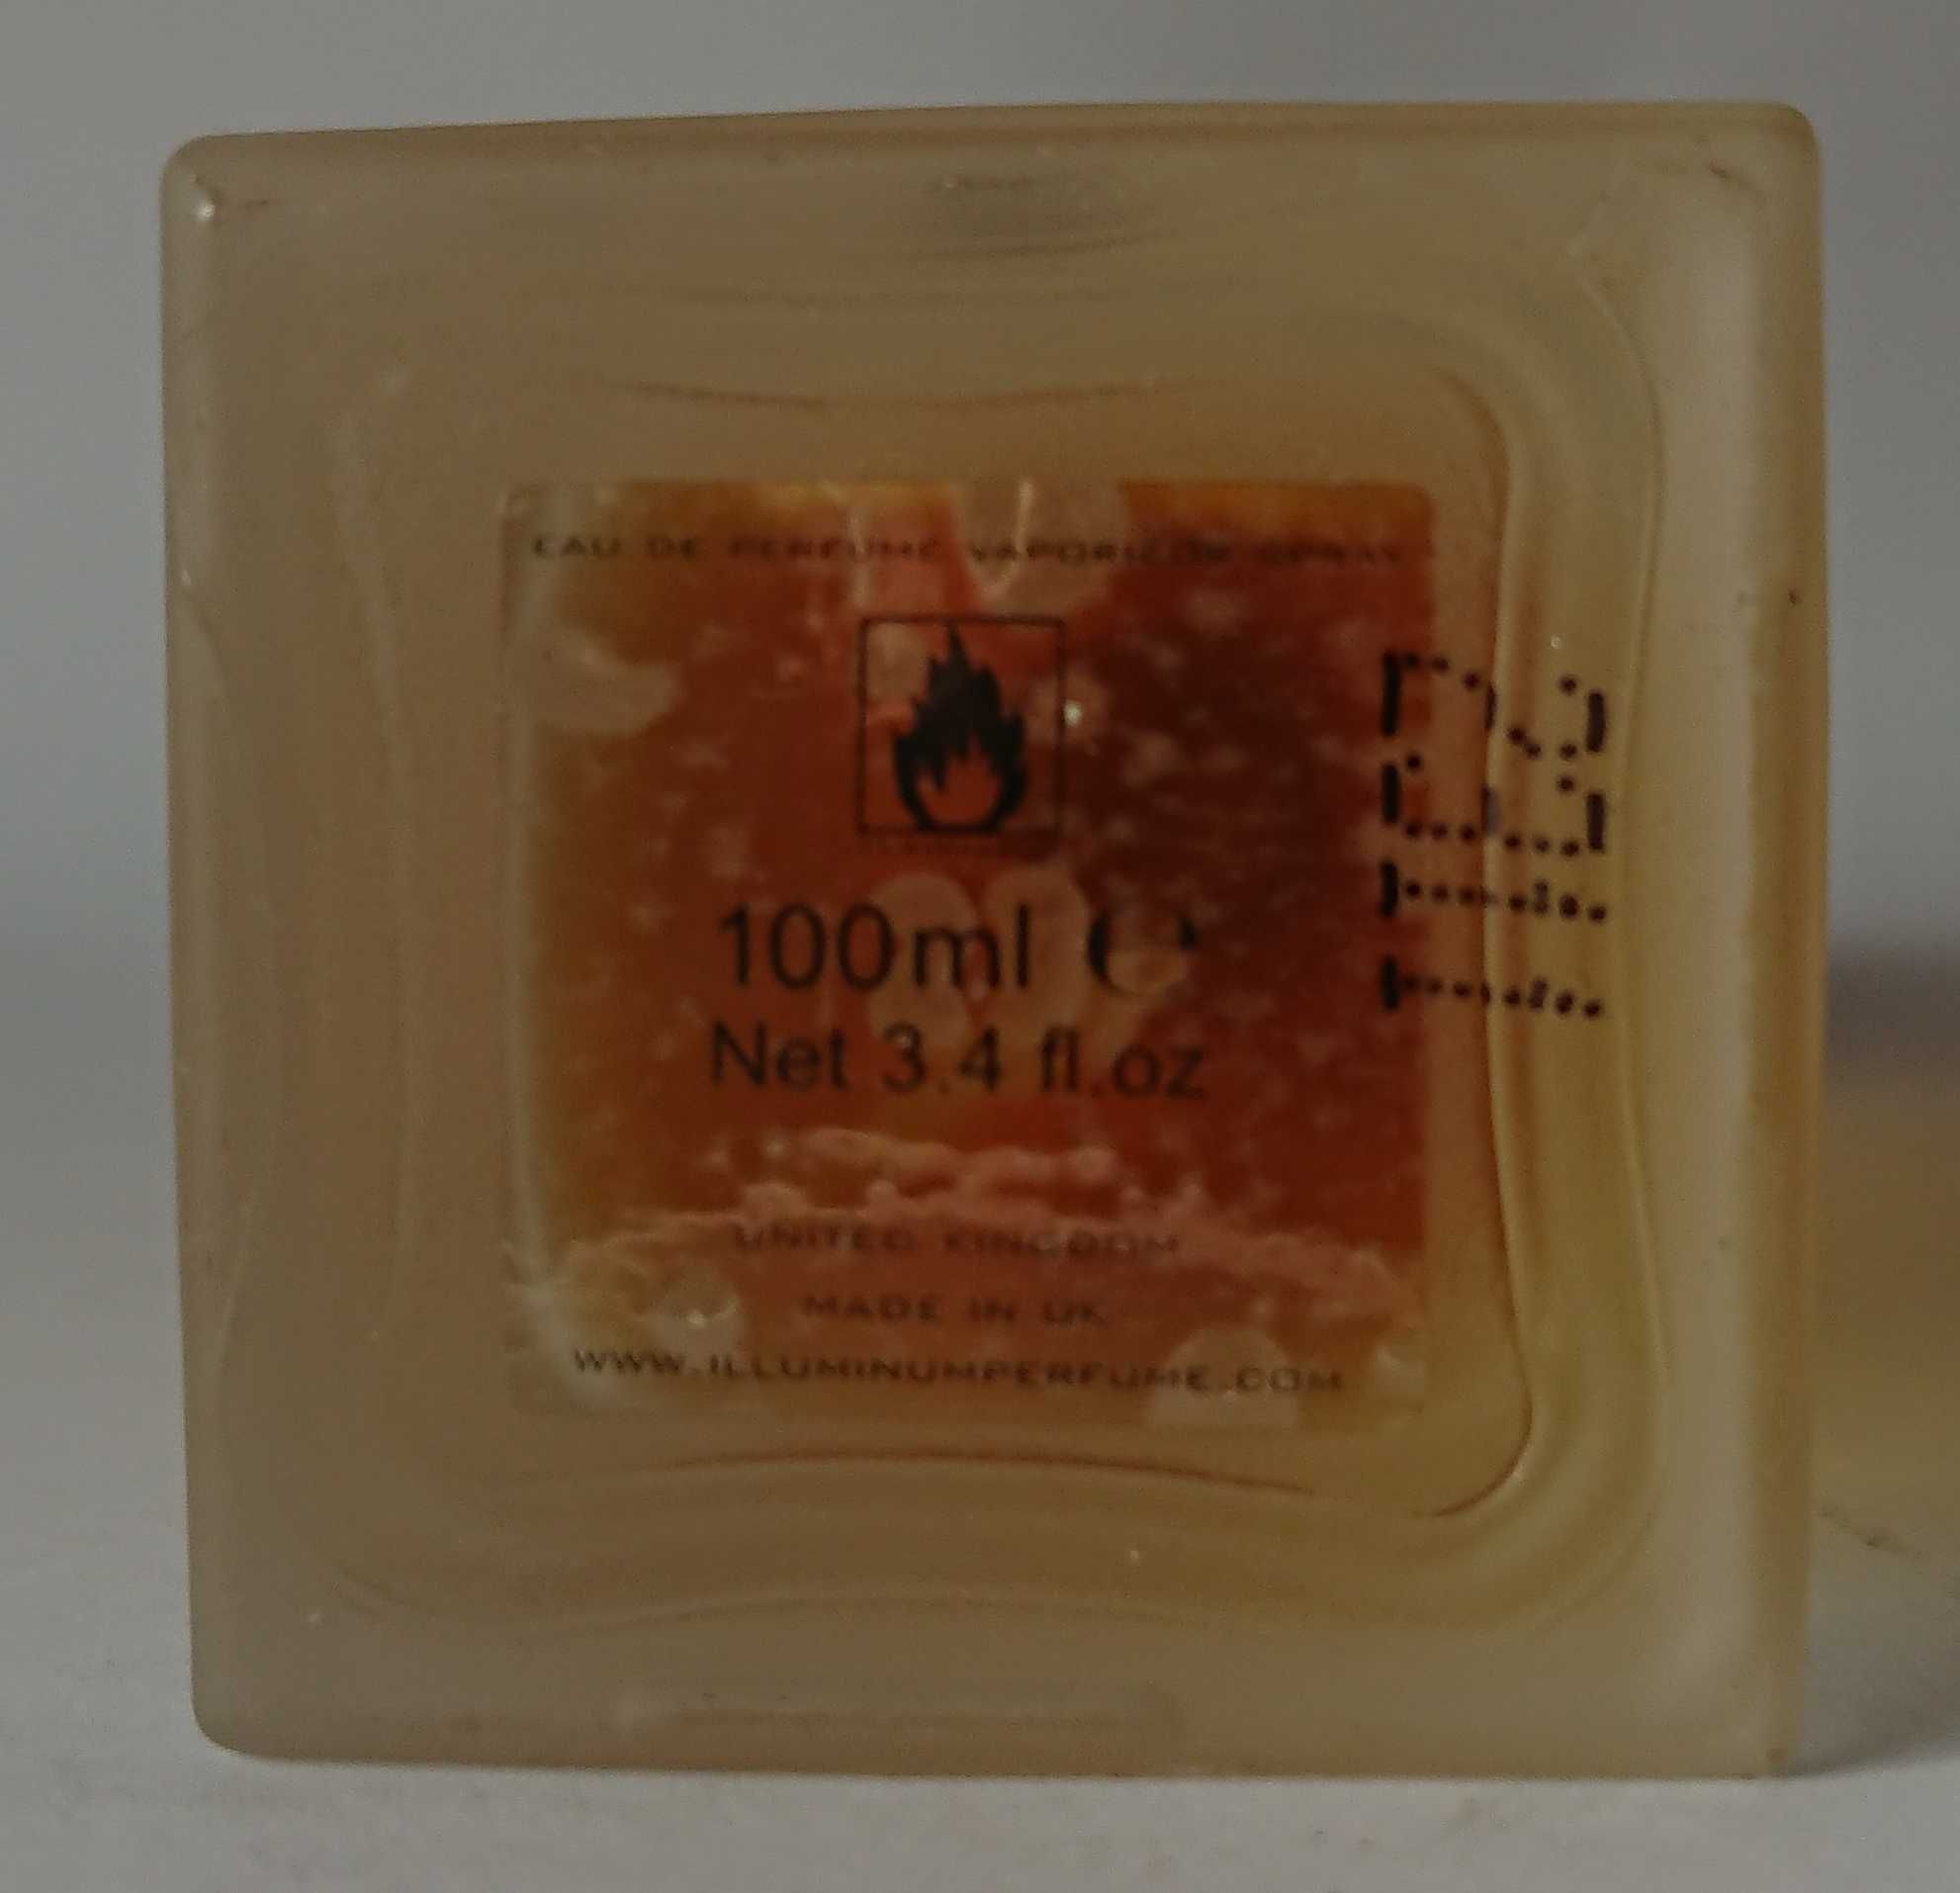 Illuminum Haute Perfume, Vetiver Oud, 100 ml EDP